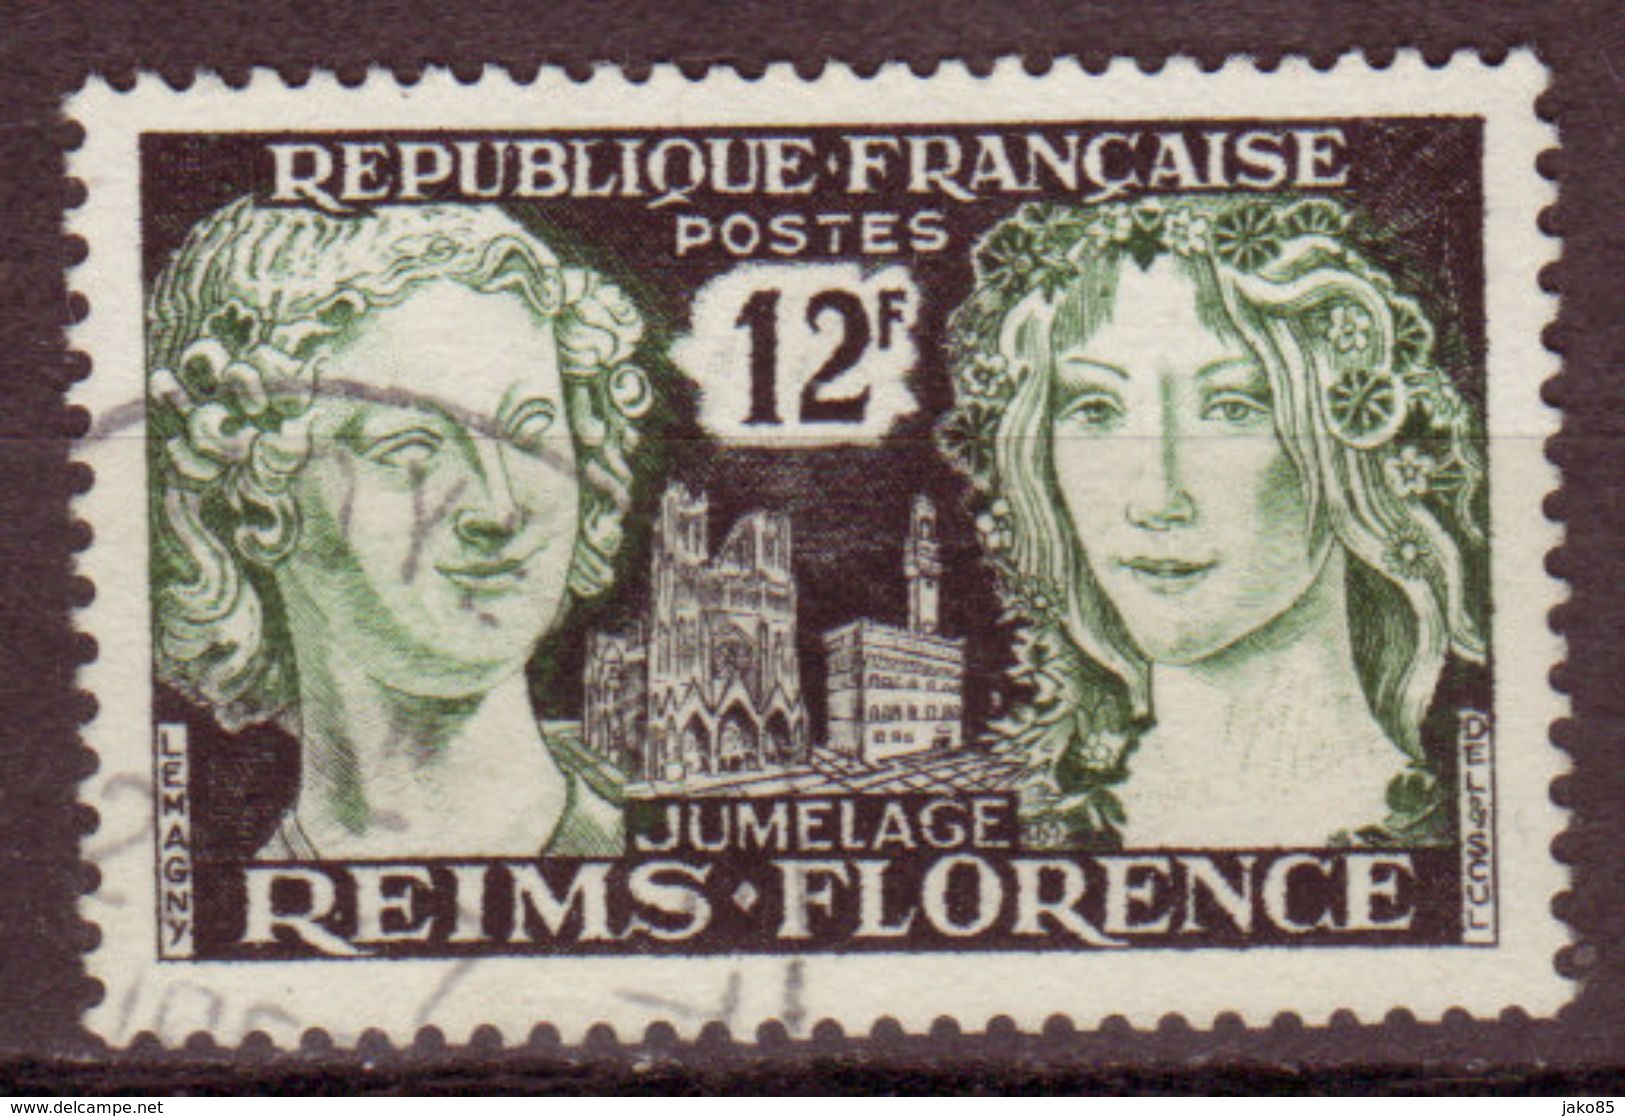 FRANCE - 1956 - YT N° 1061 - Oblitéré - Jumelage Reims- Florence - Oblitérés